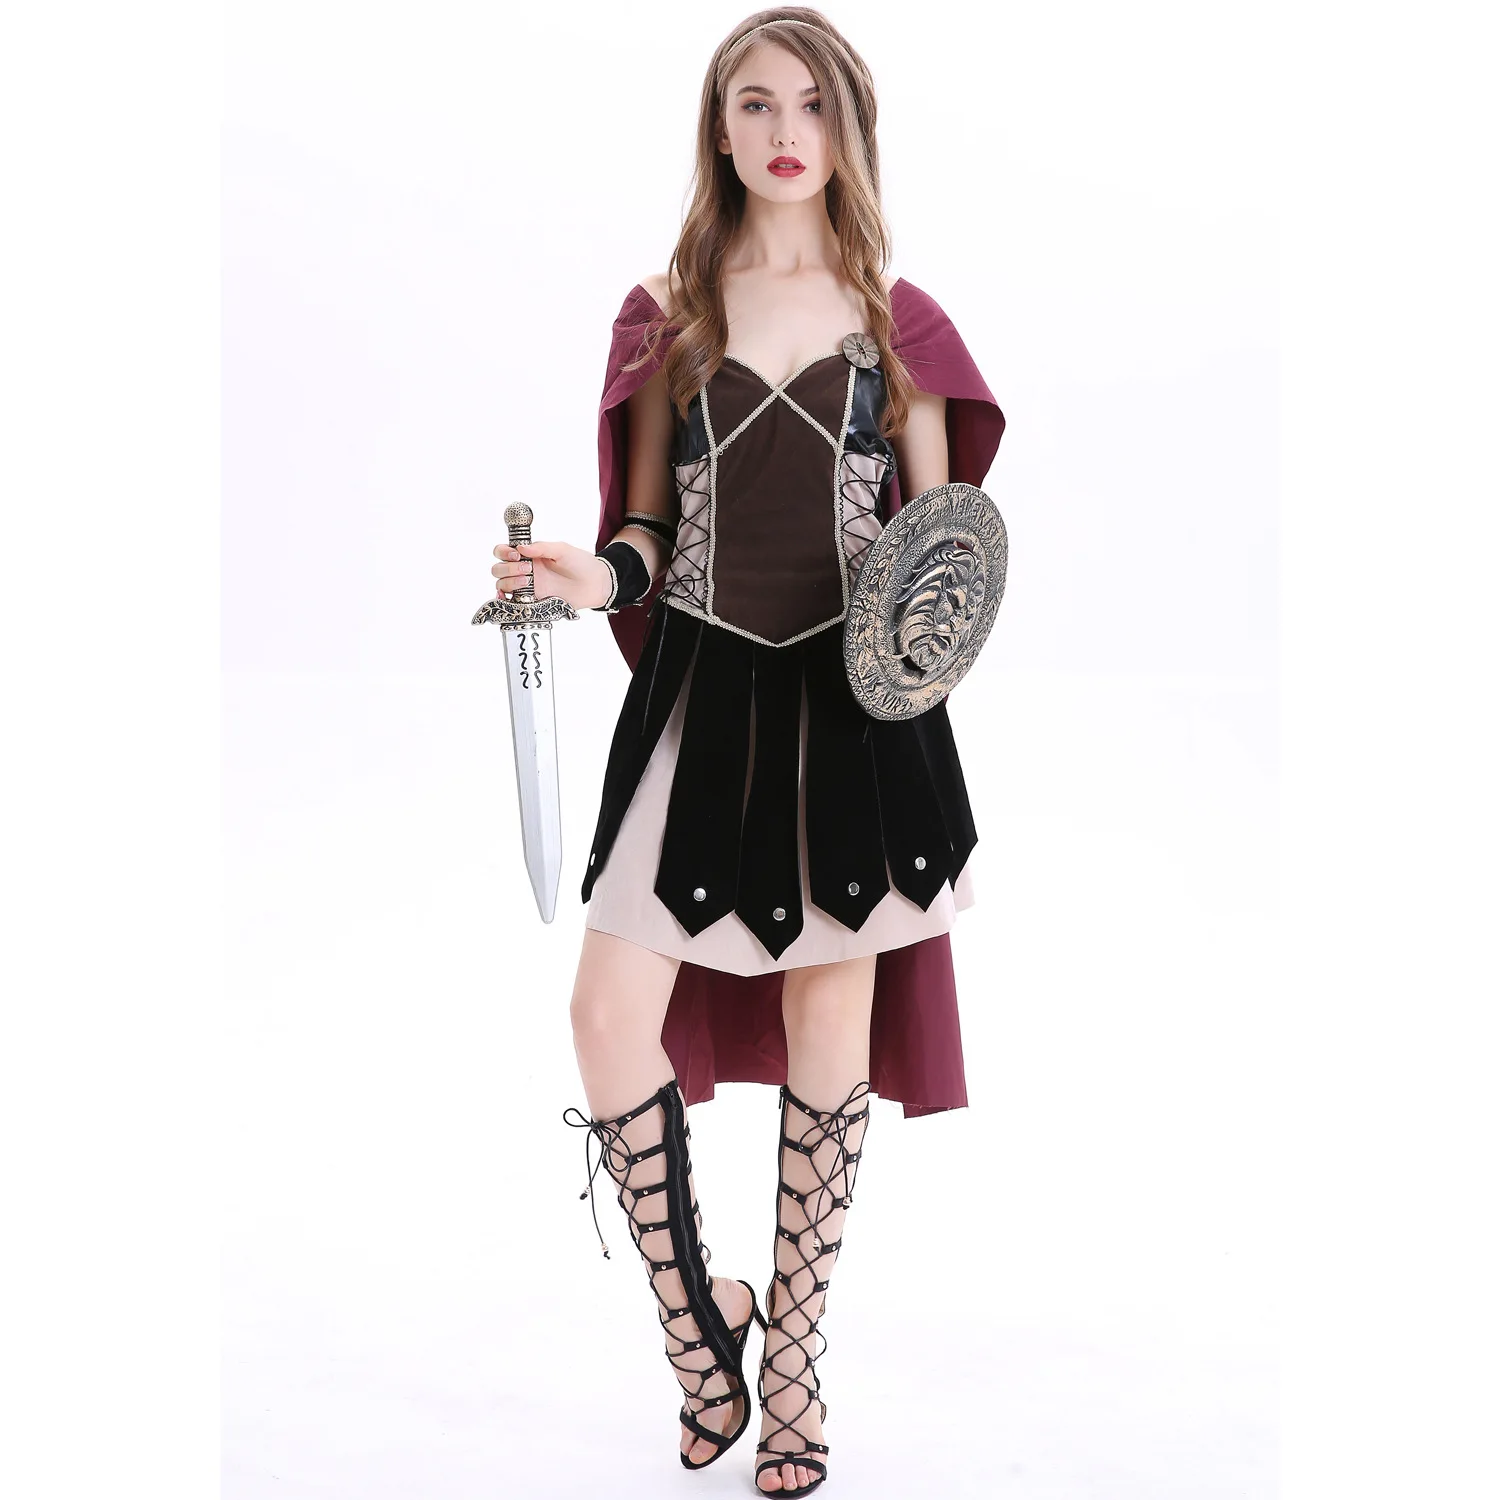 female 300 spartan costume